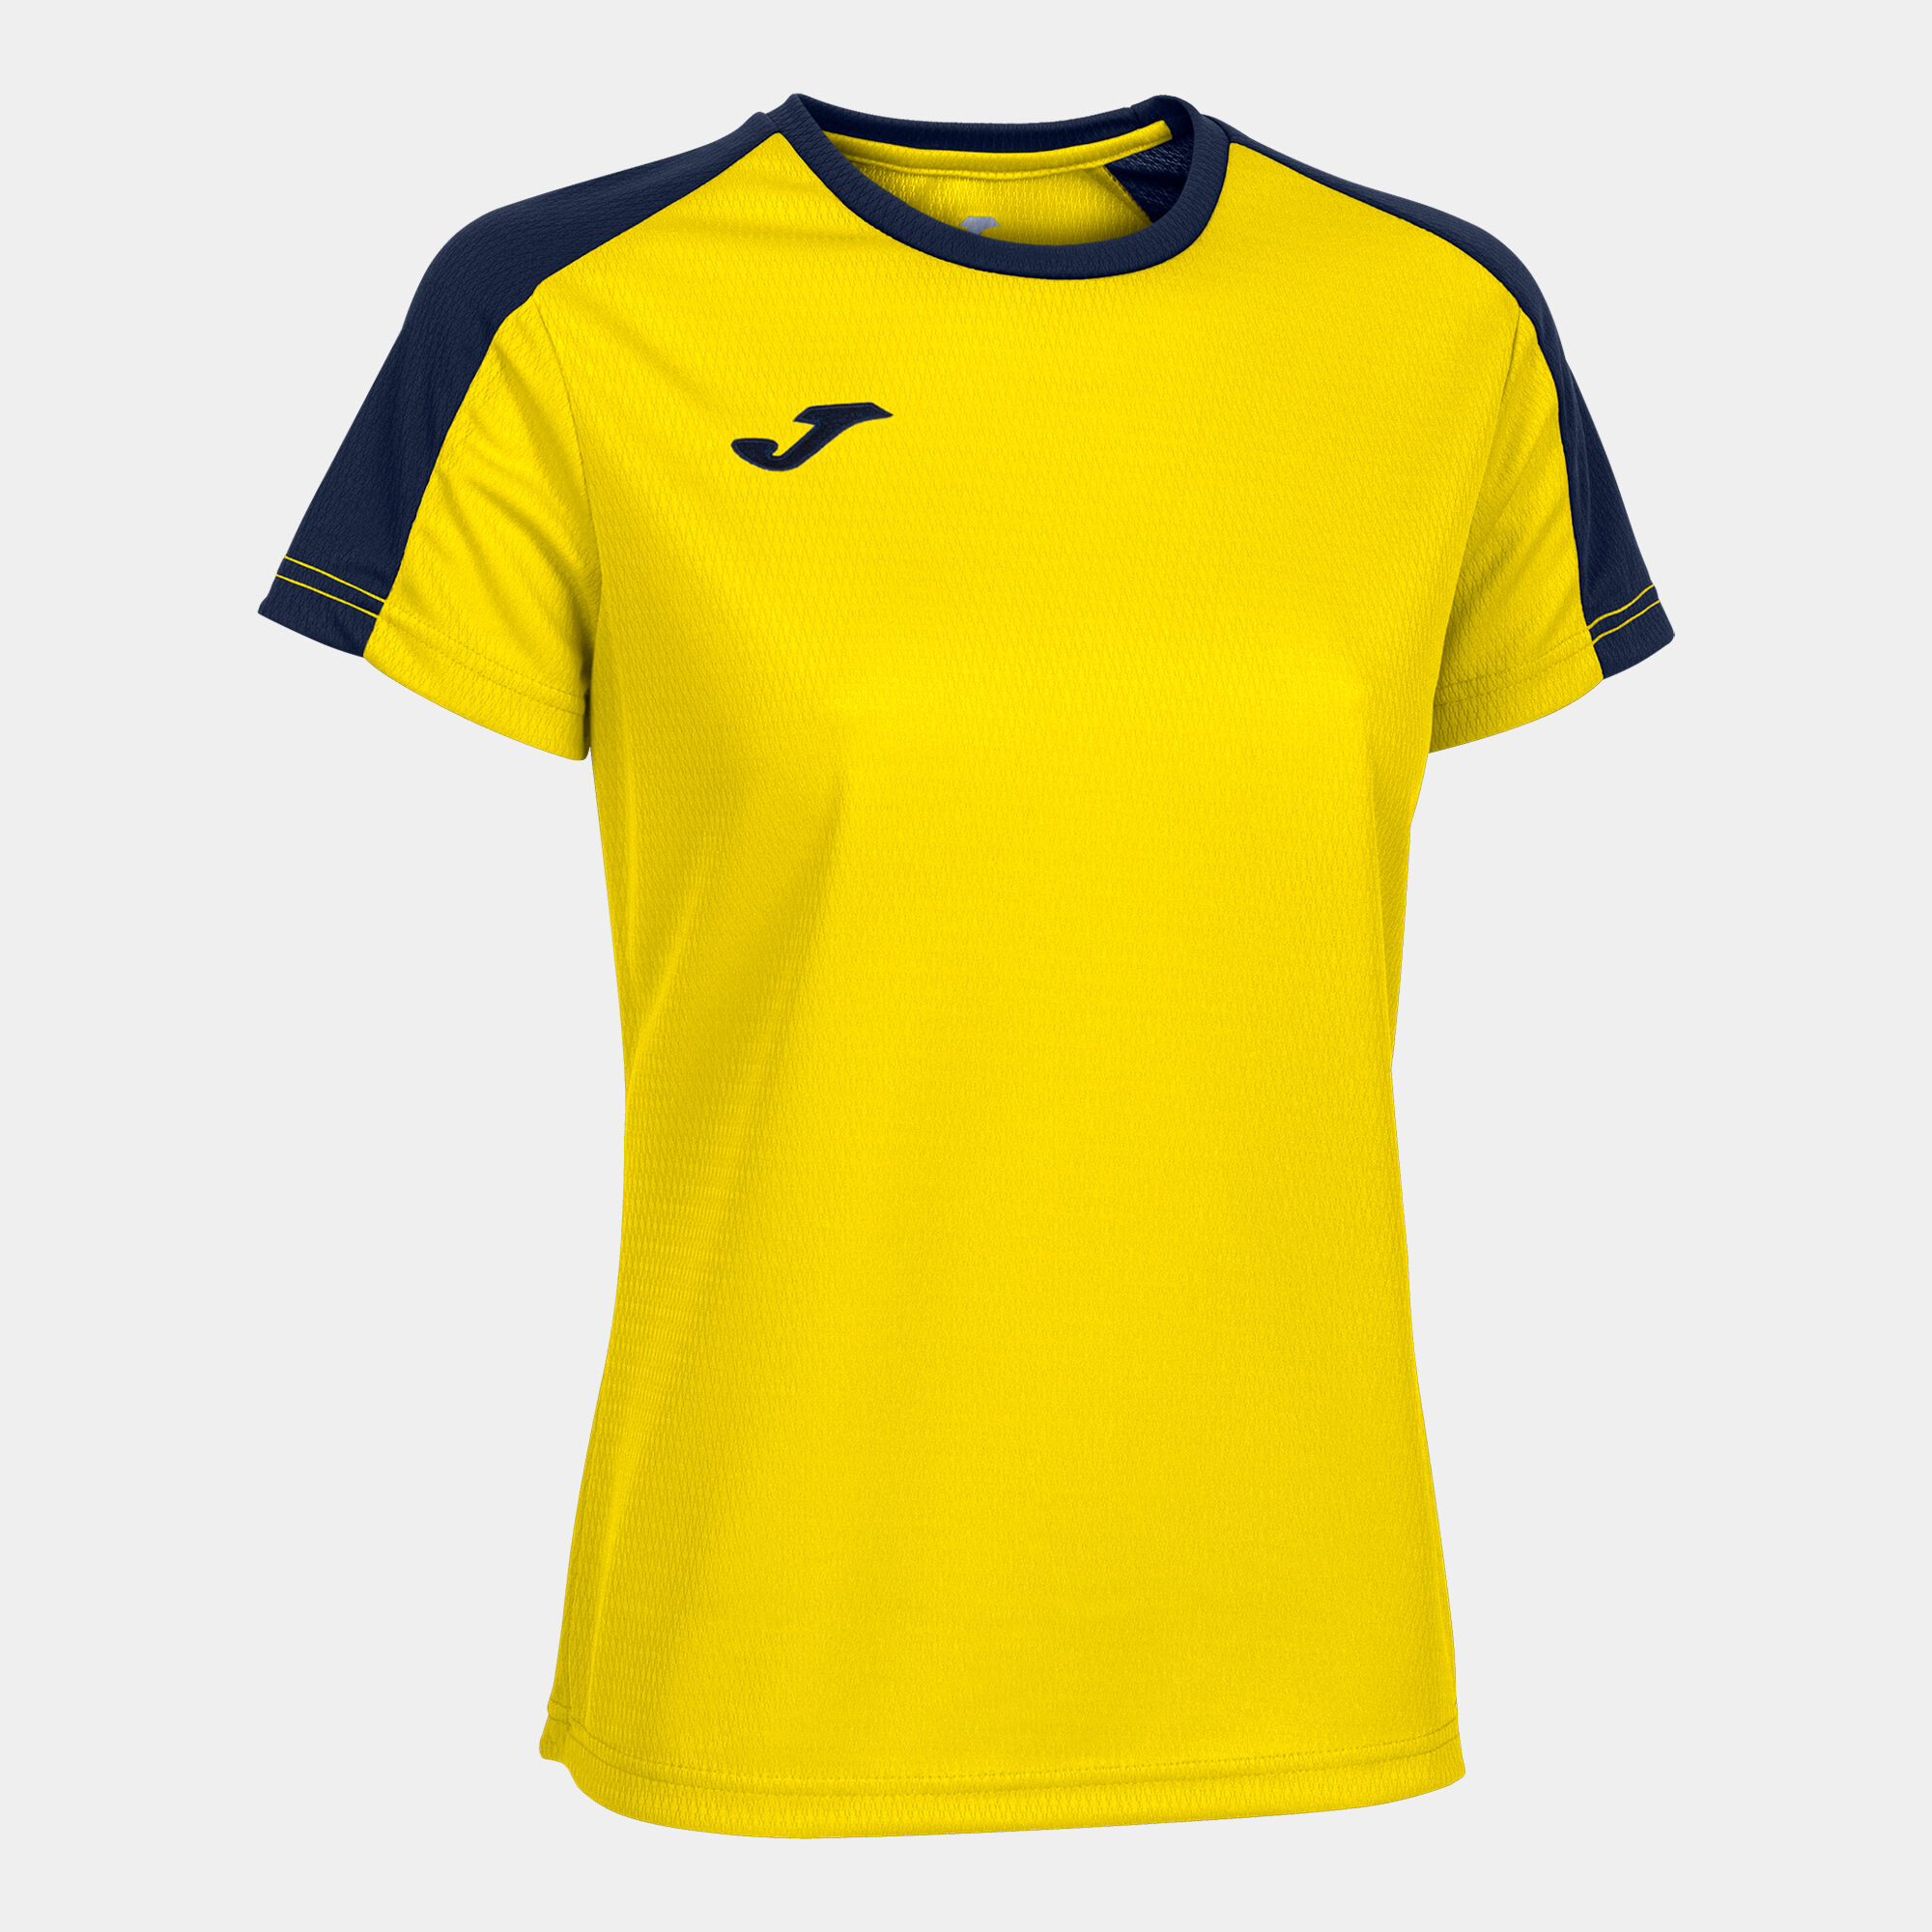 Shirt short sleeve woman Eco Championship yellow navy blue